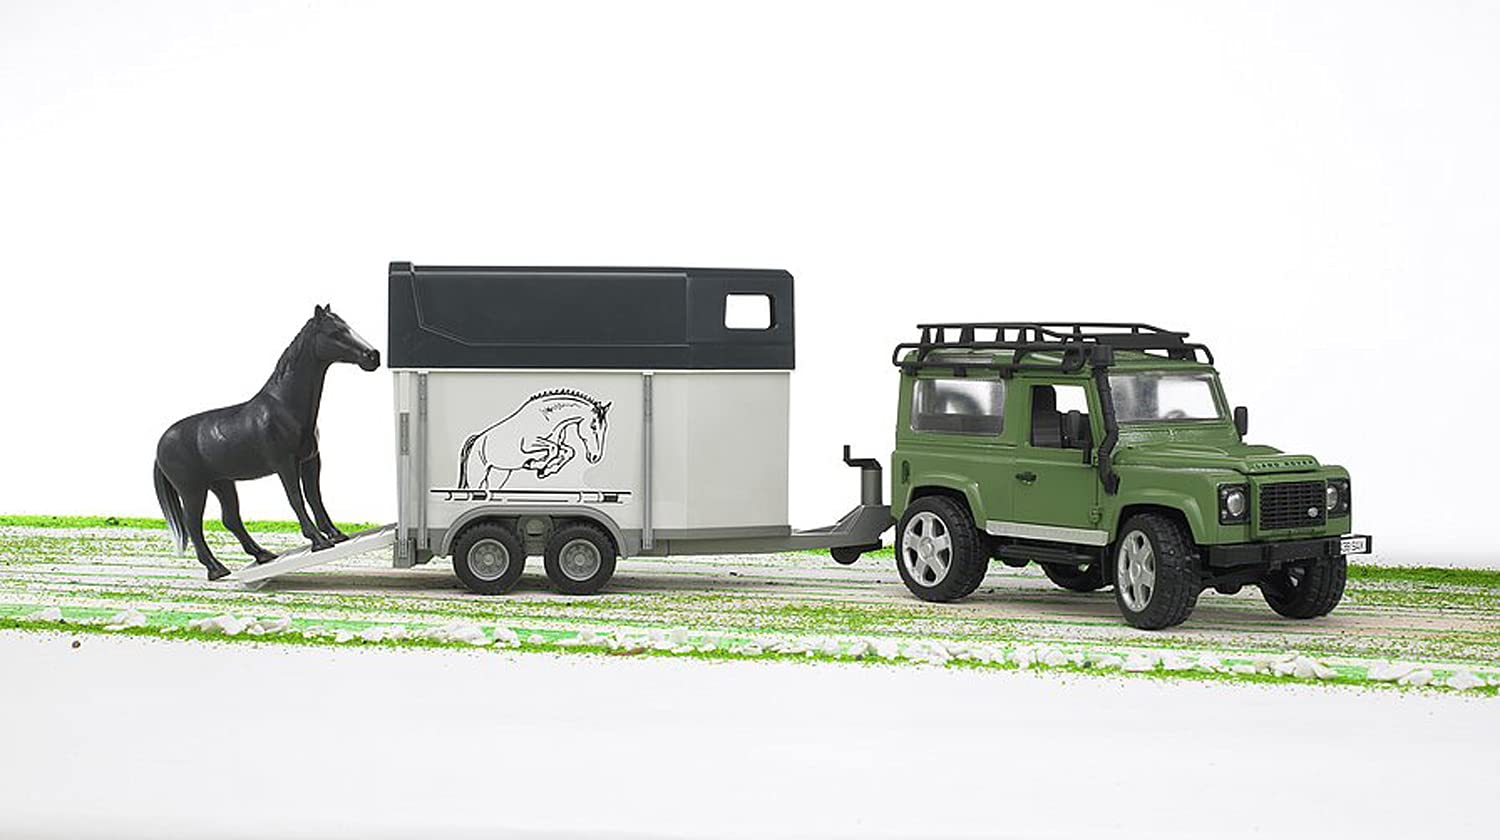 Bruder Toys (2592) Land Rover Defender Station Wagon with Horse Trailer & Horse